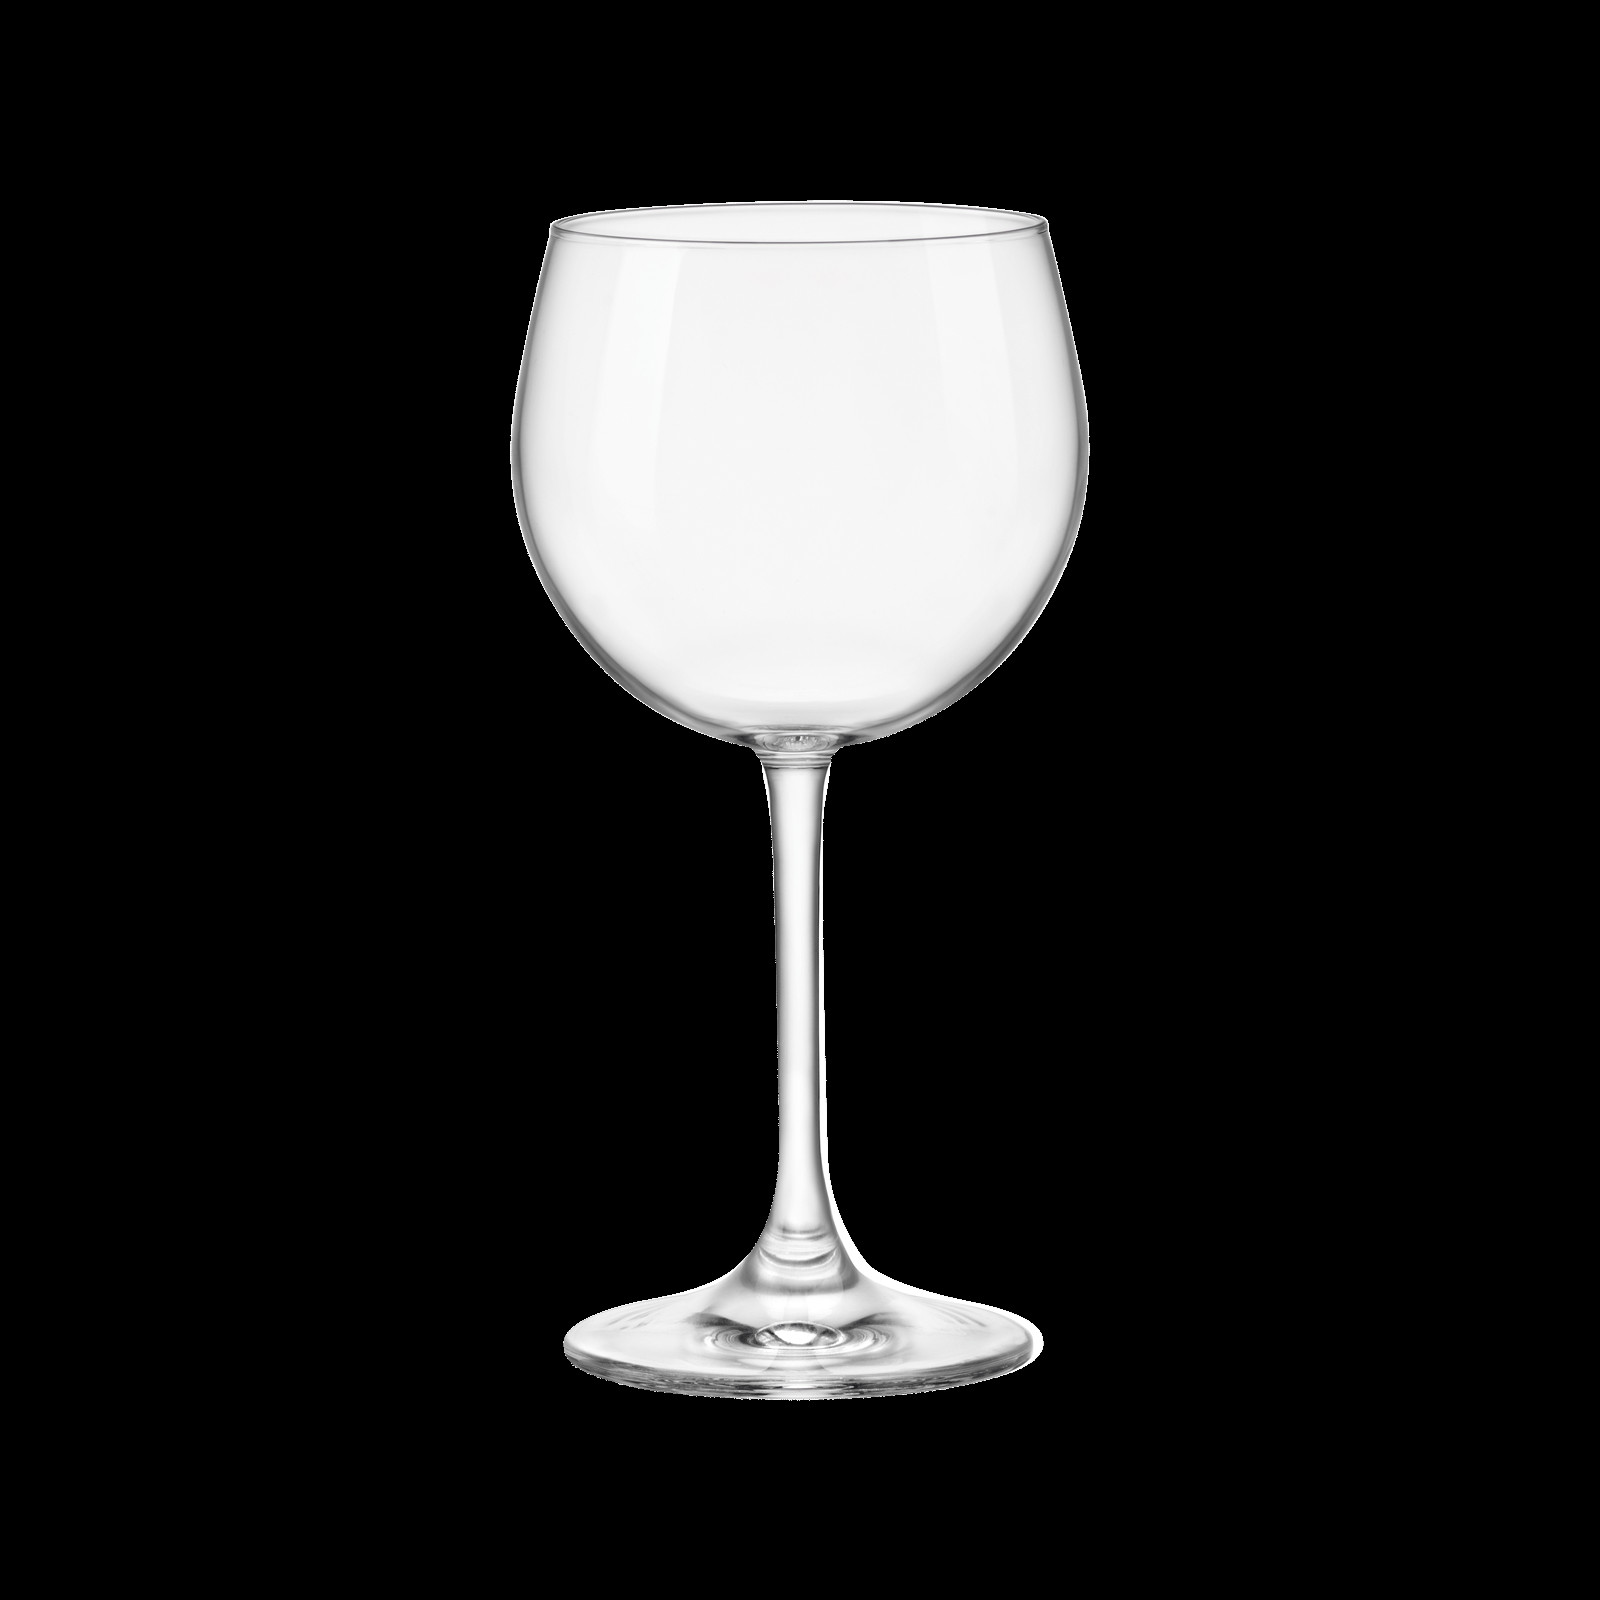 13 Fashionable 3 Foot Tall Wine Glass Vases 2024 free download 3 foot tall wine glass vases of archivi products bormioli rocco for barolo glass riserva